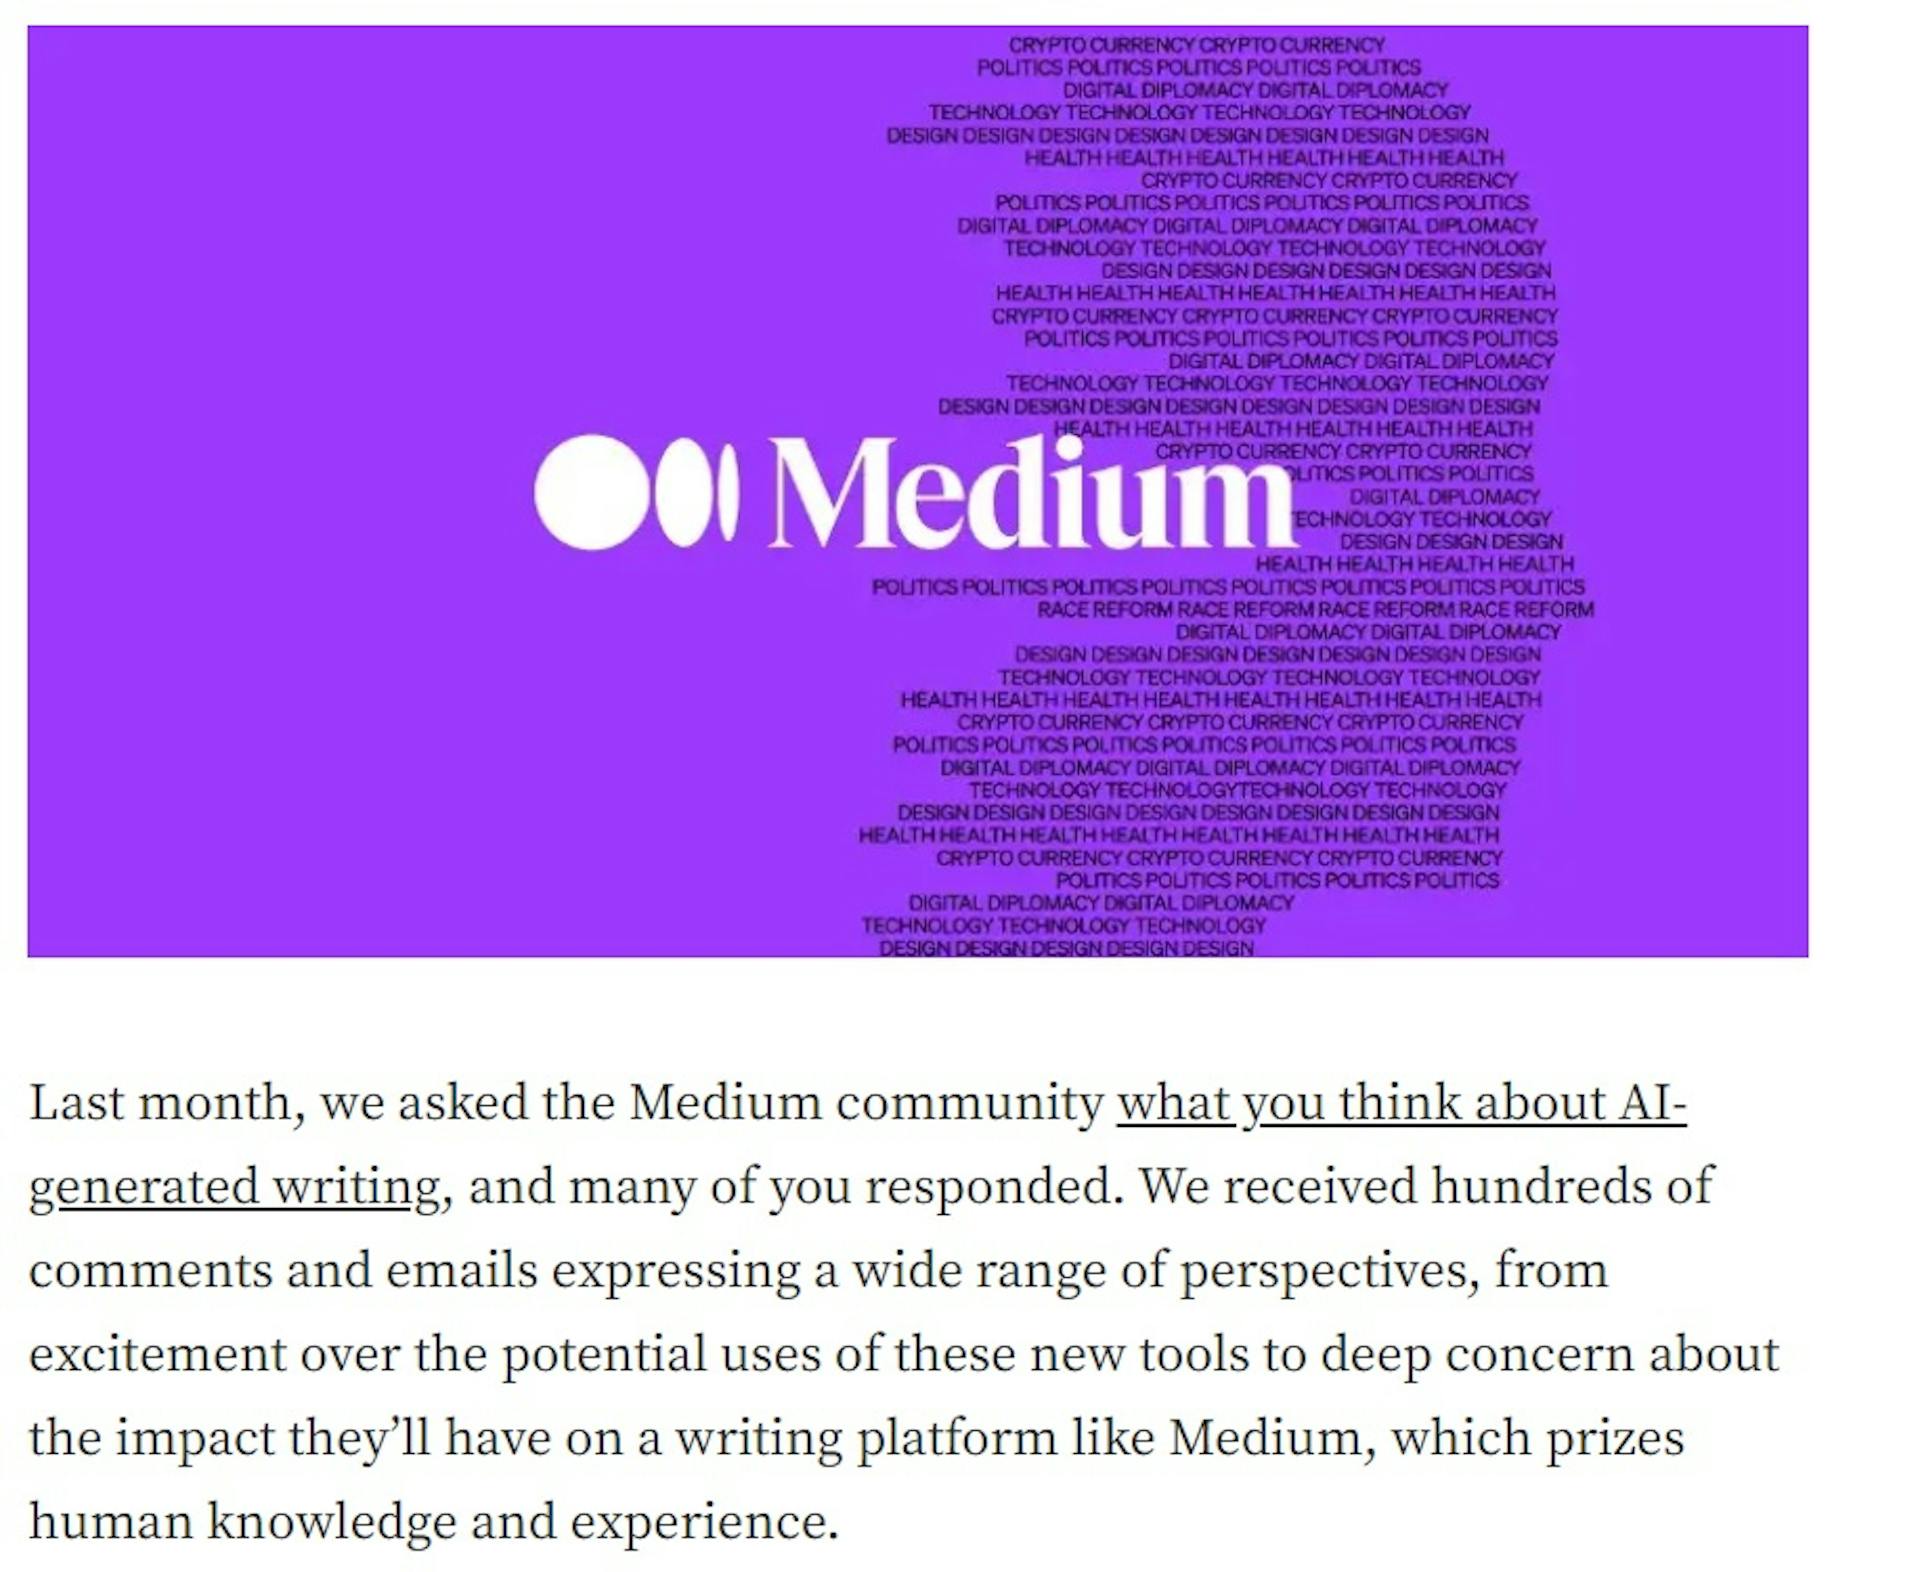 Medium Policy on AI-generated writing